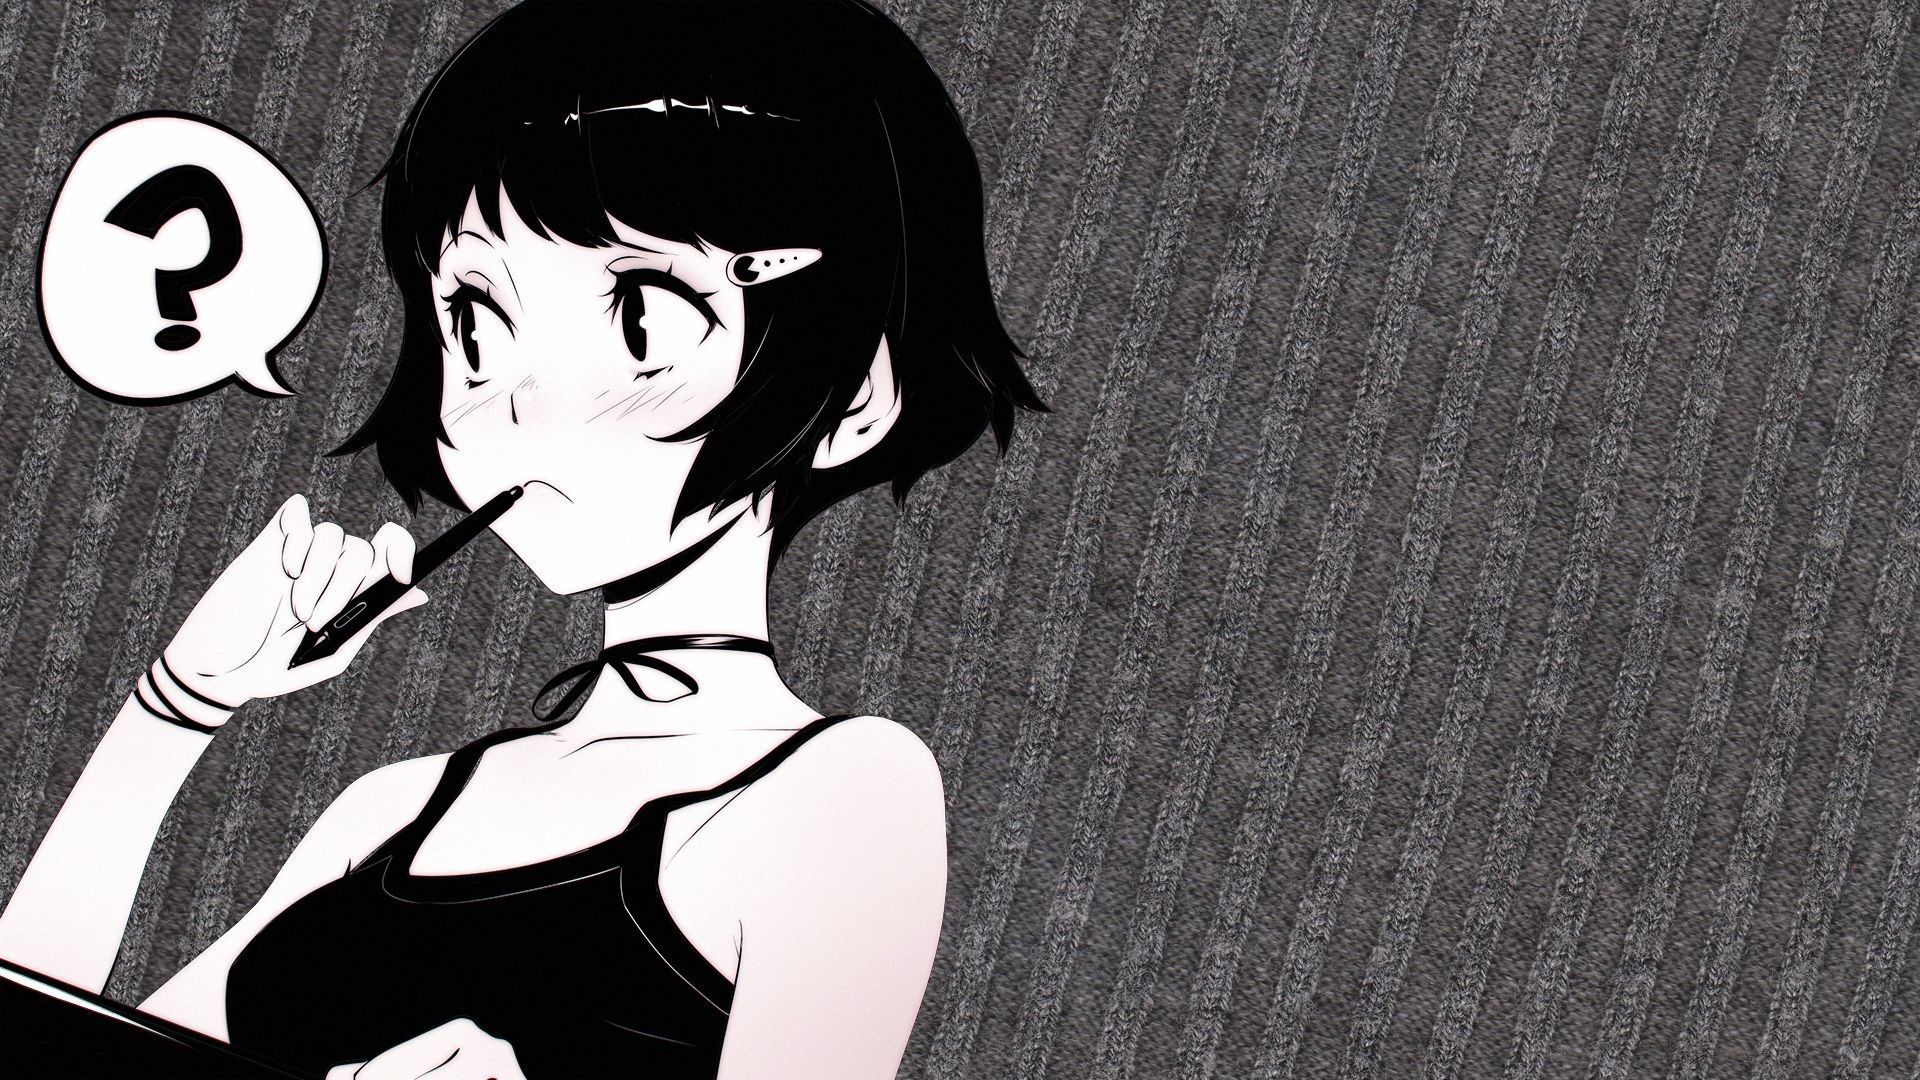 Black Aesthetic Anime Desktop Wallpapers - Wallpaper Cave